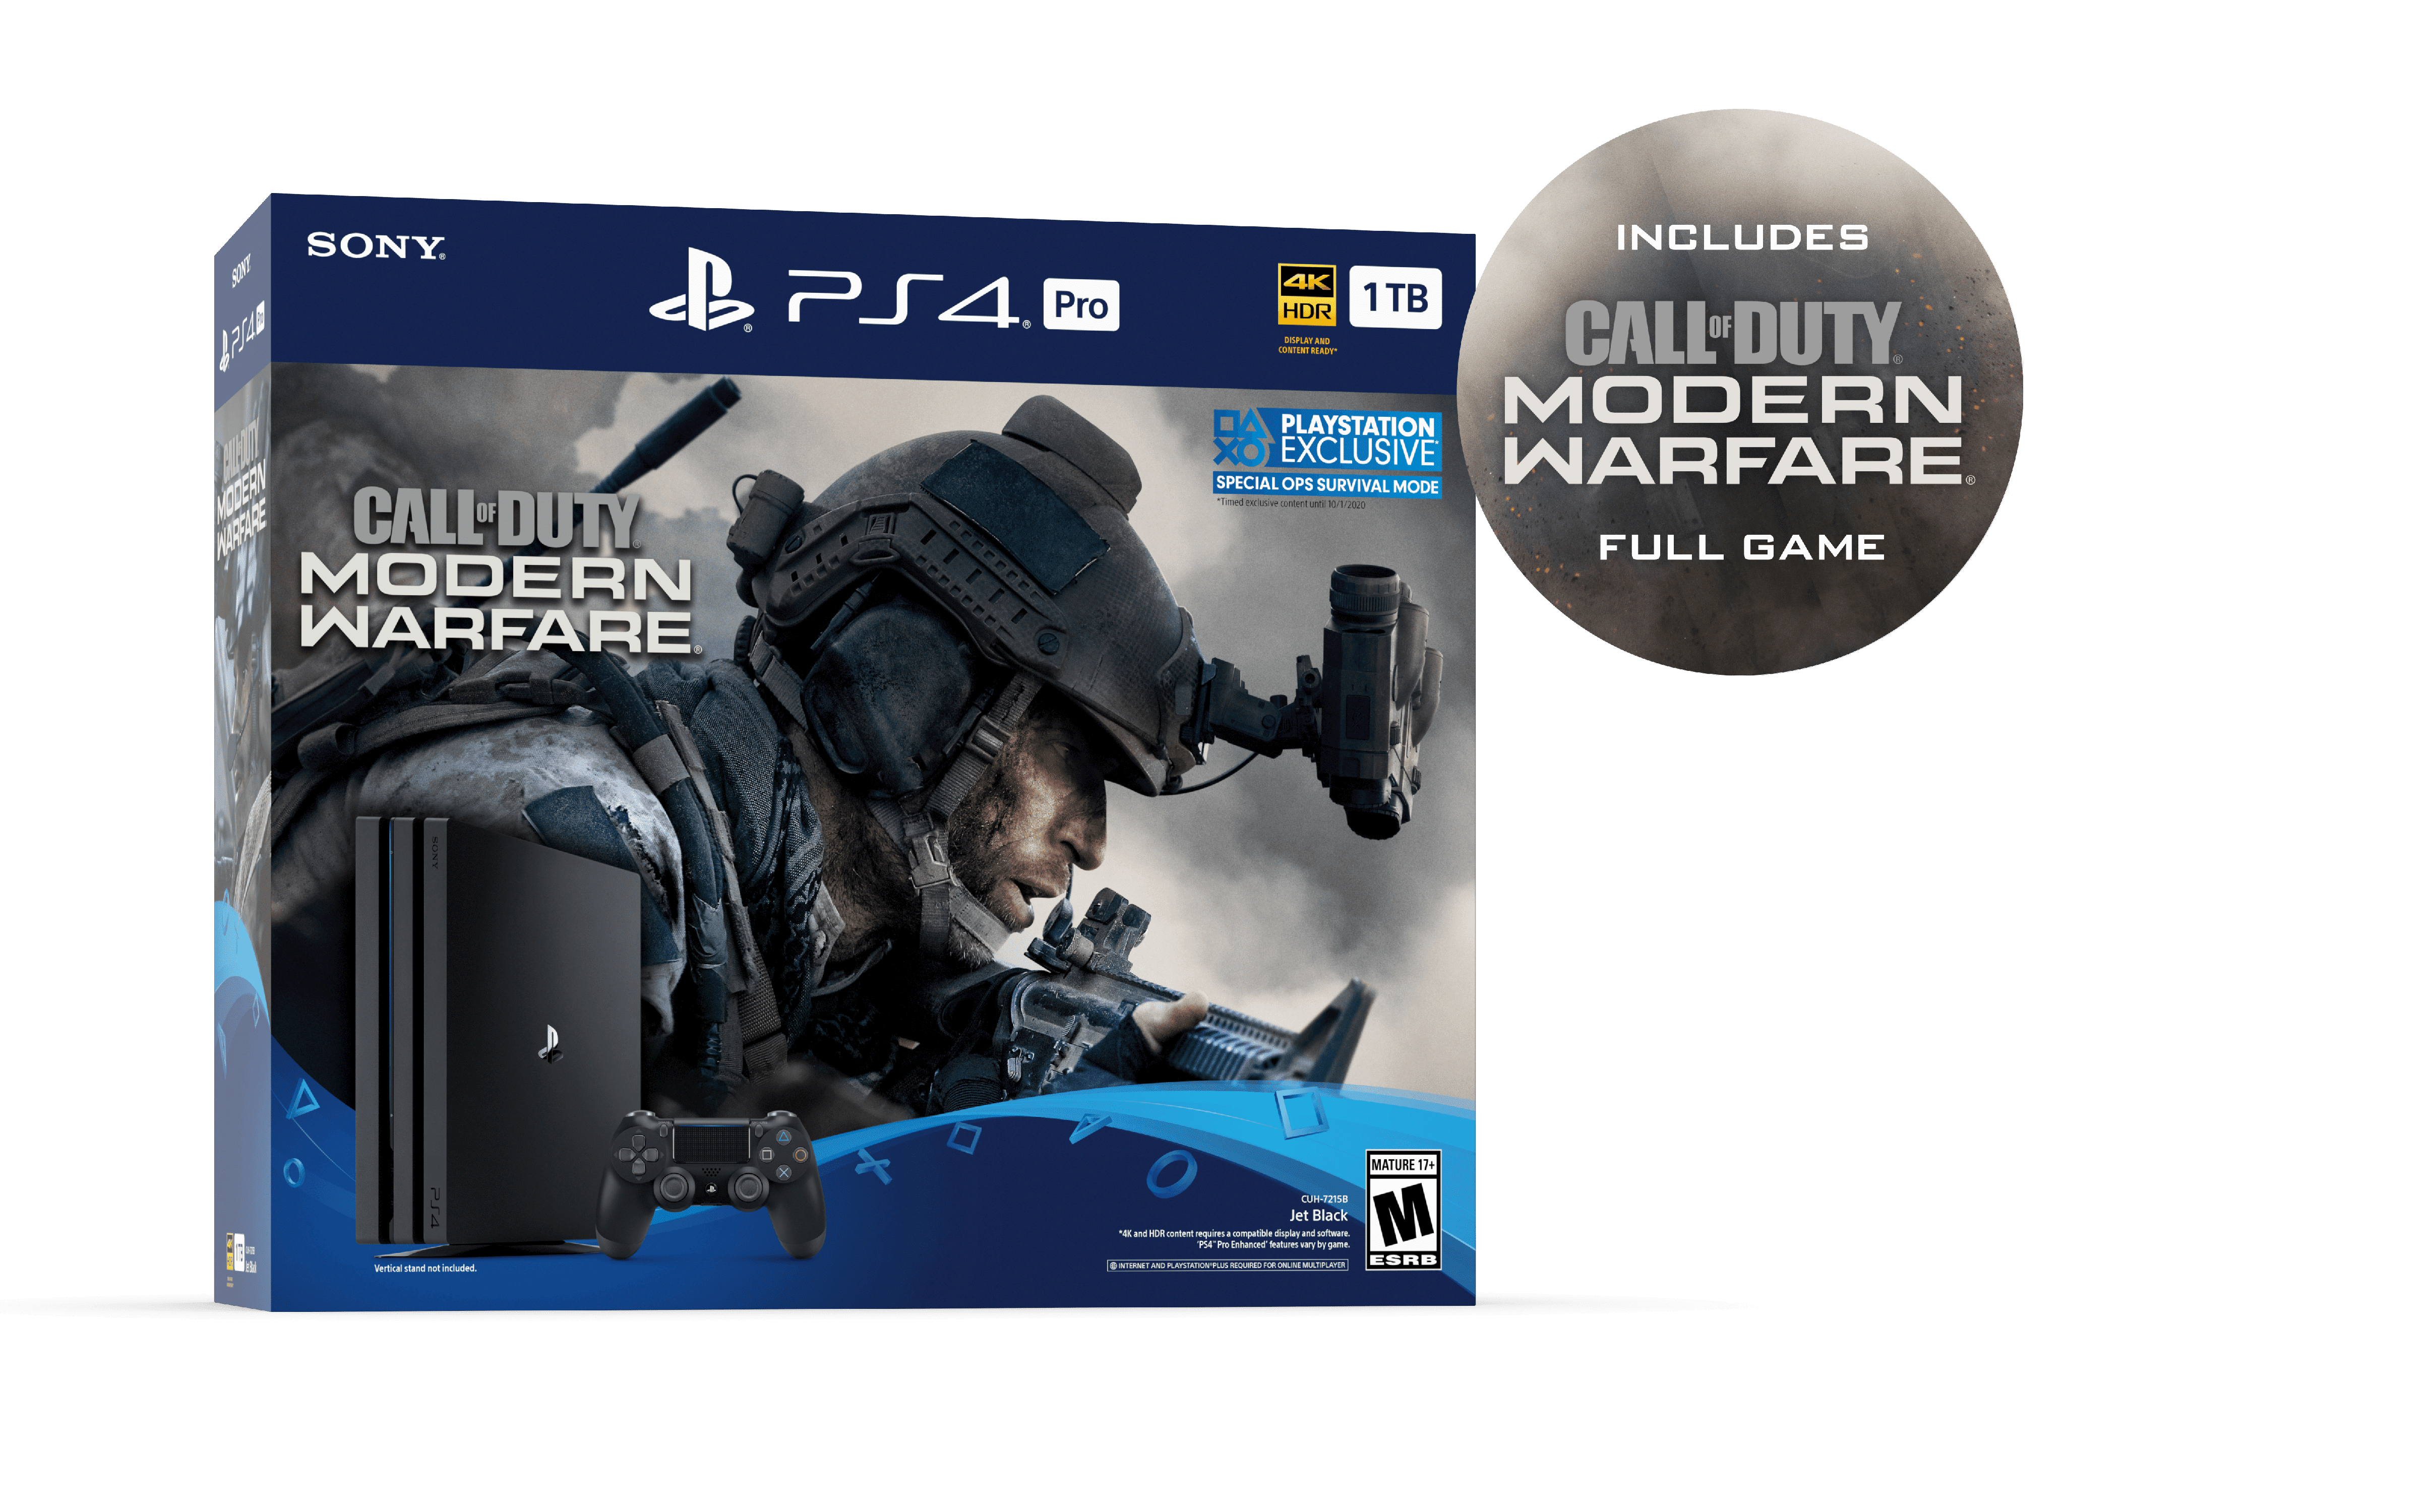 Call Of Duty Modern Warfare Playstation 4 Pro Bundle Walmart Com Walmart Com